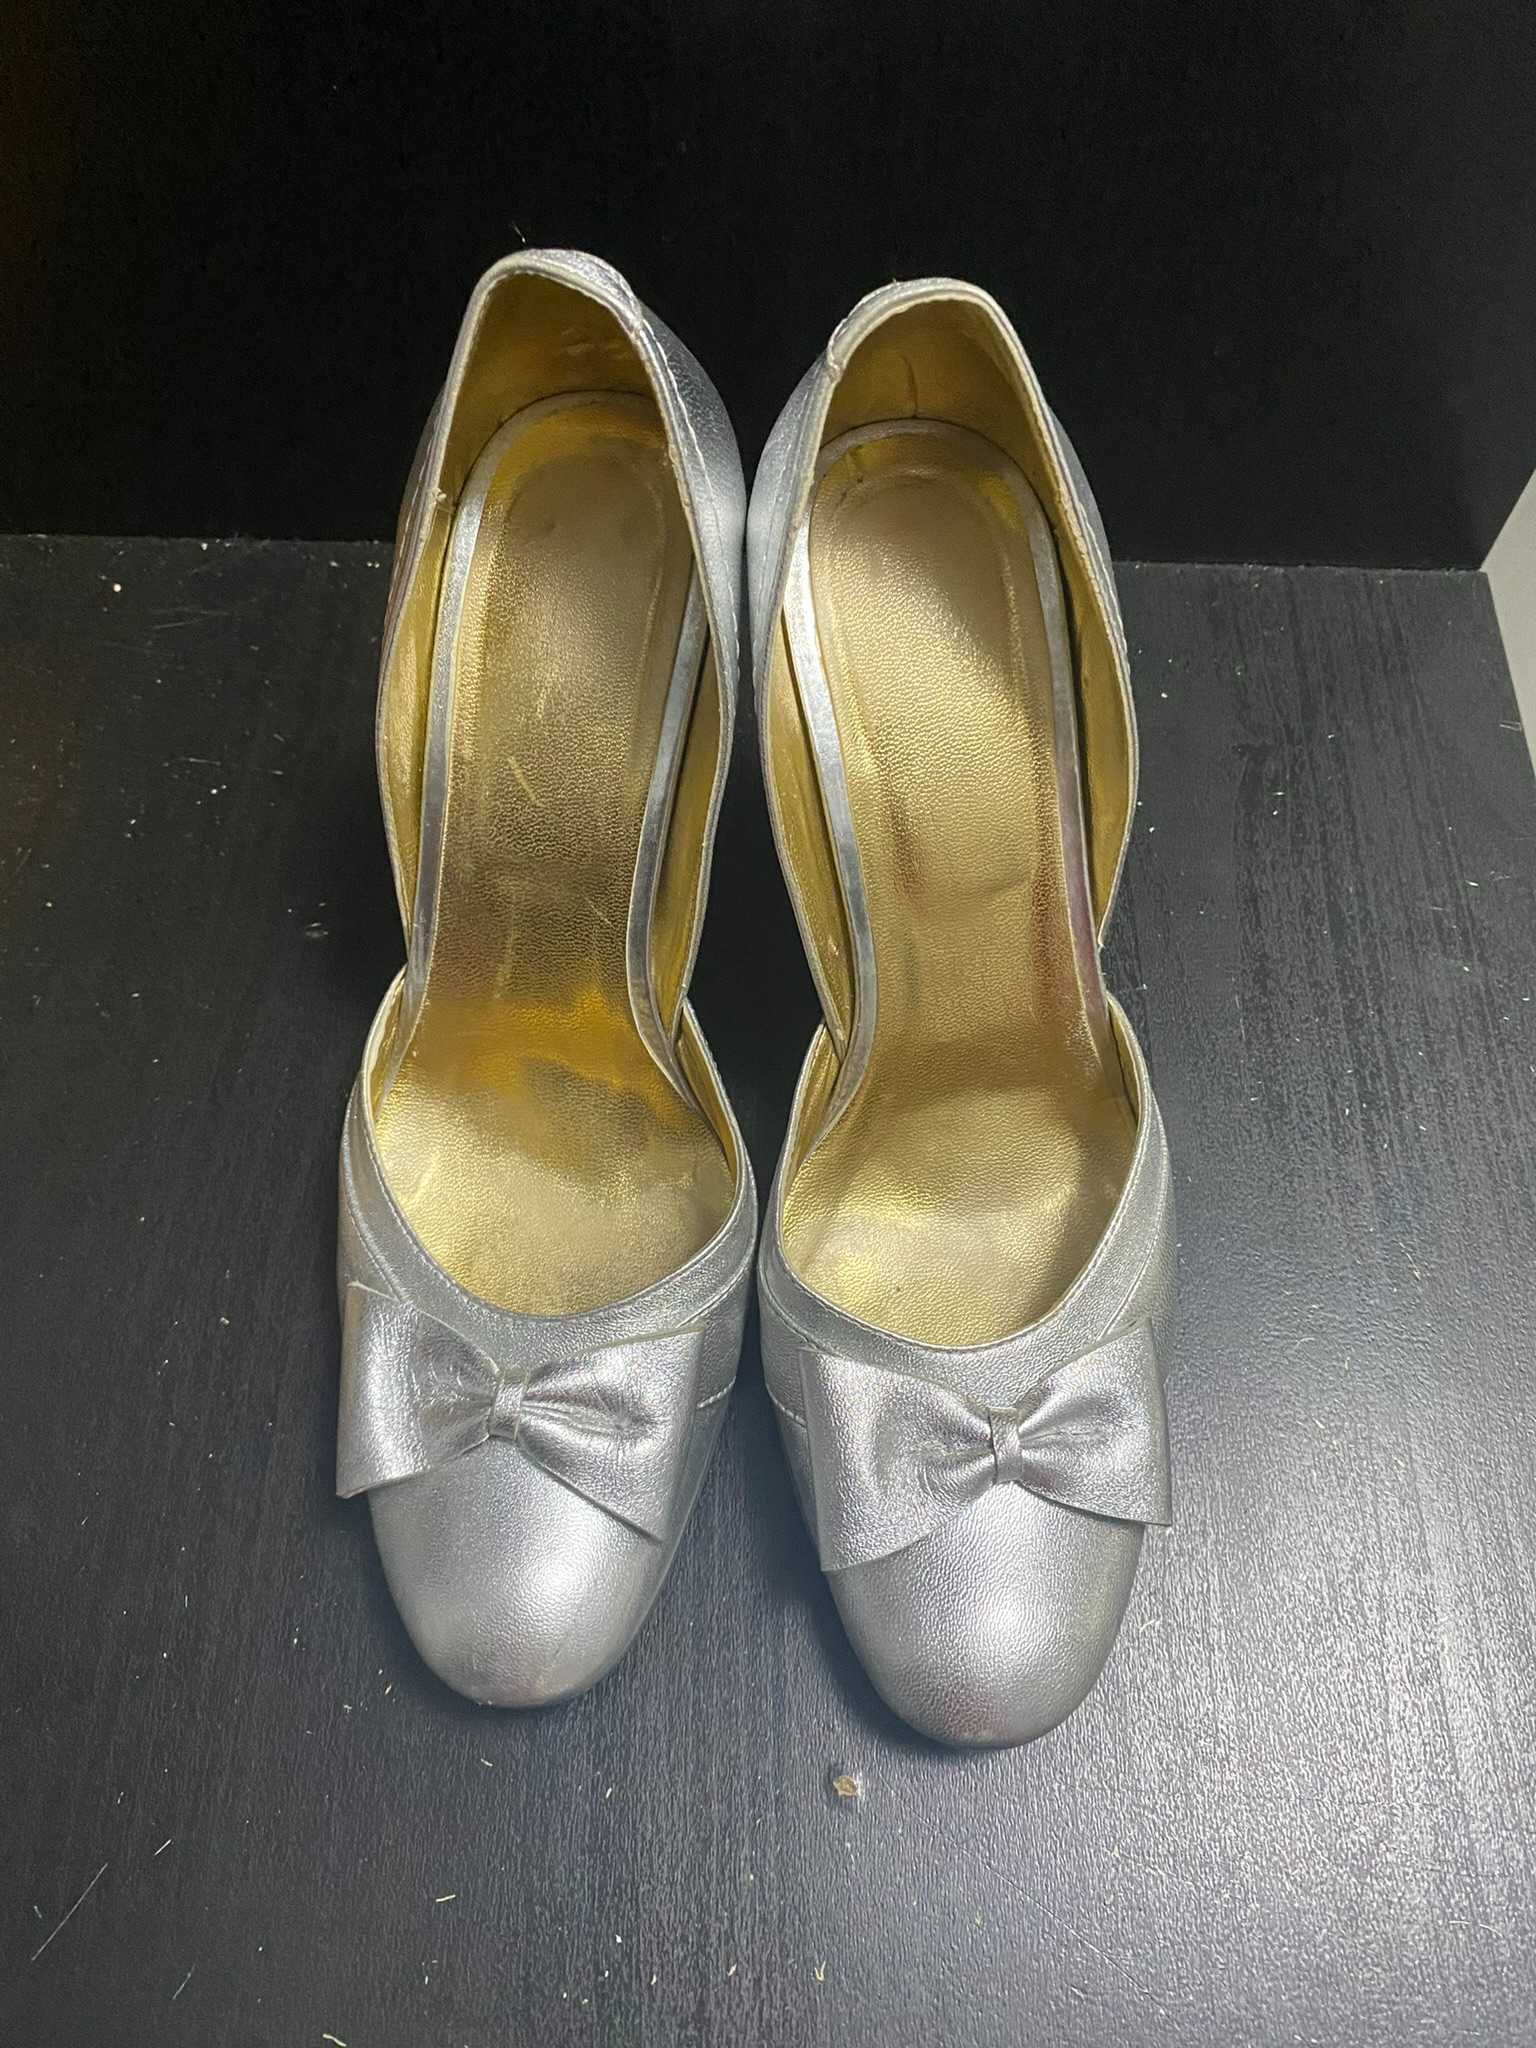 Pantofi argintii - Marime 36